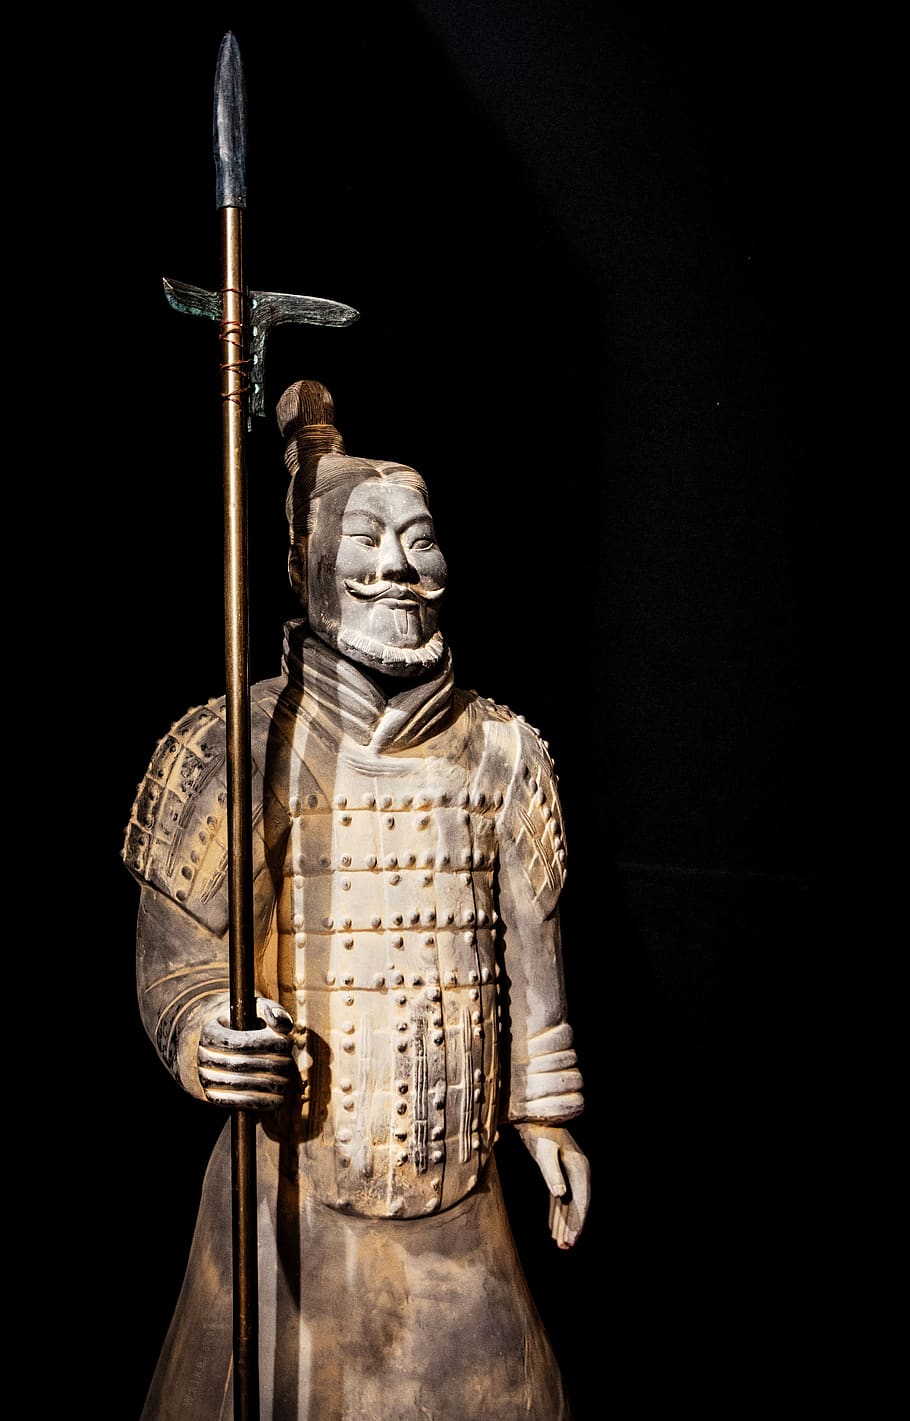 terakotový warrior, terracotta, terakotová army, warrior, china, the statue of, soldier, xian, army, history